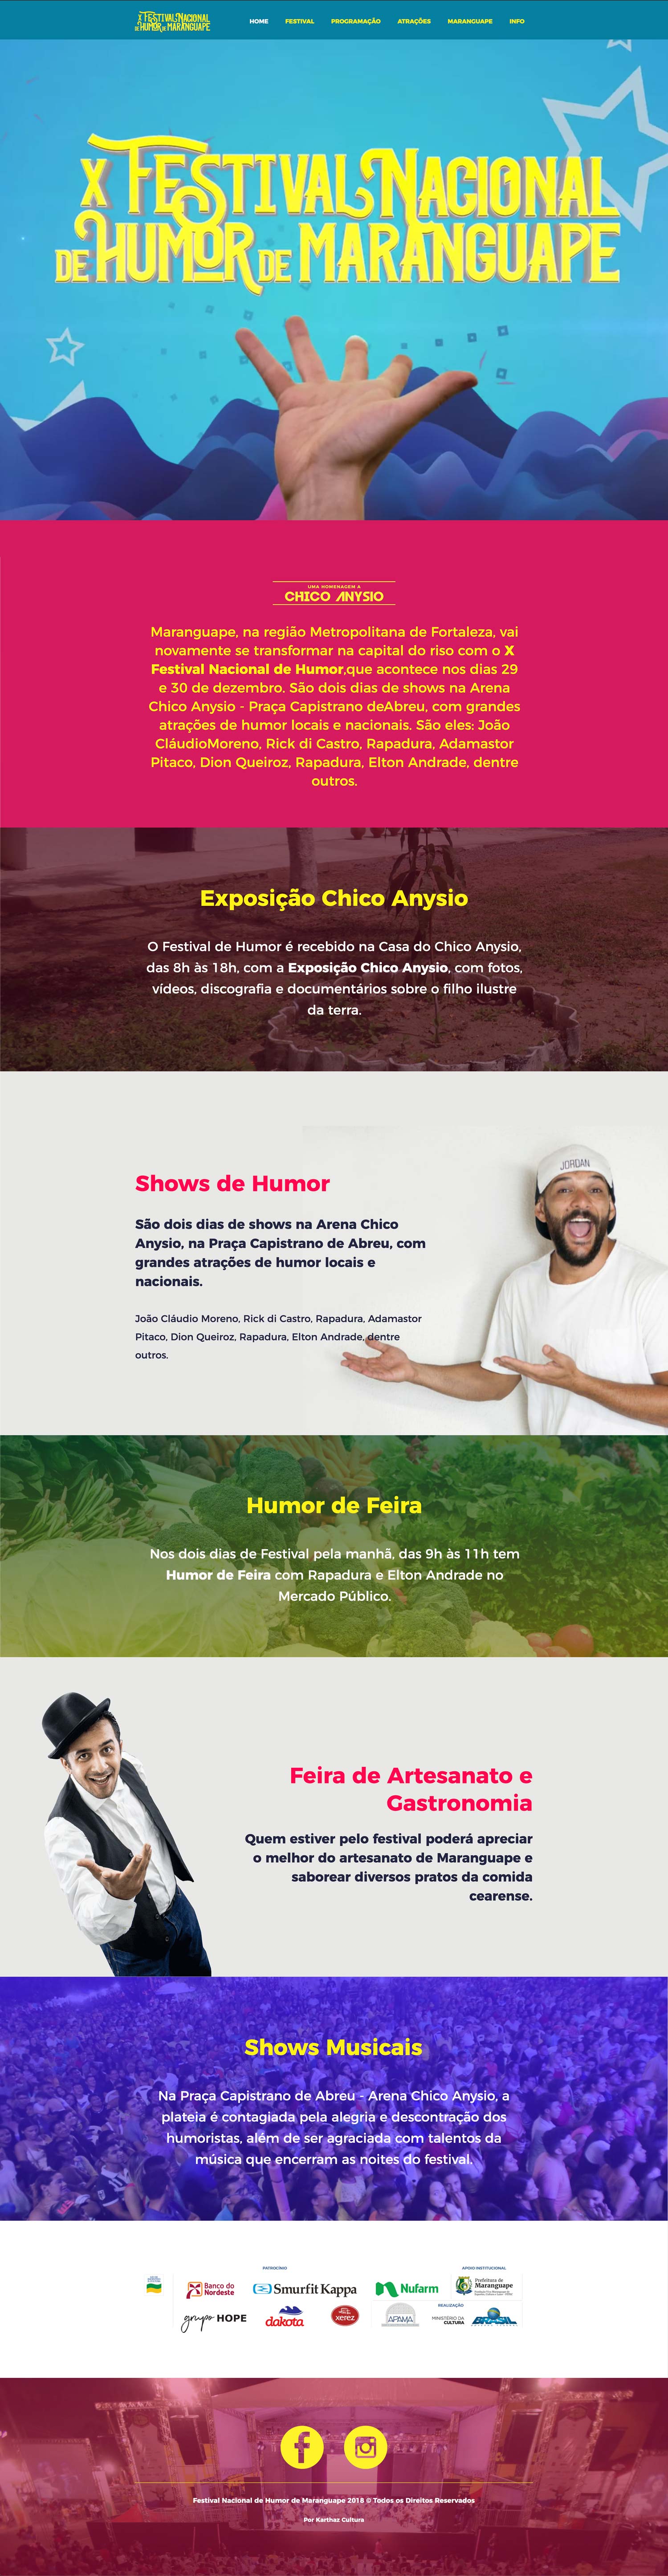 X Festival Nacional de Humor de Maranguape